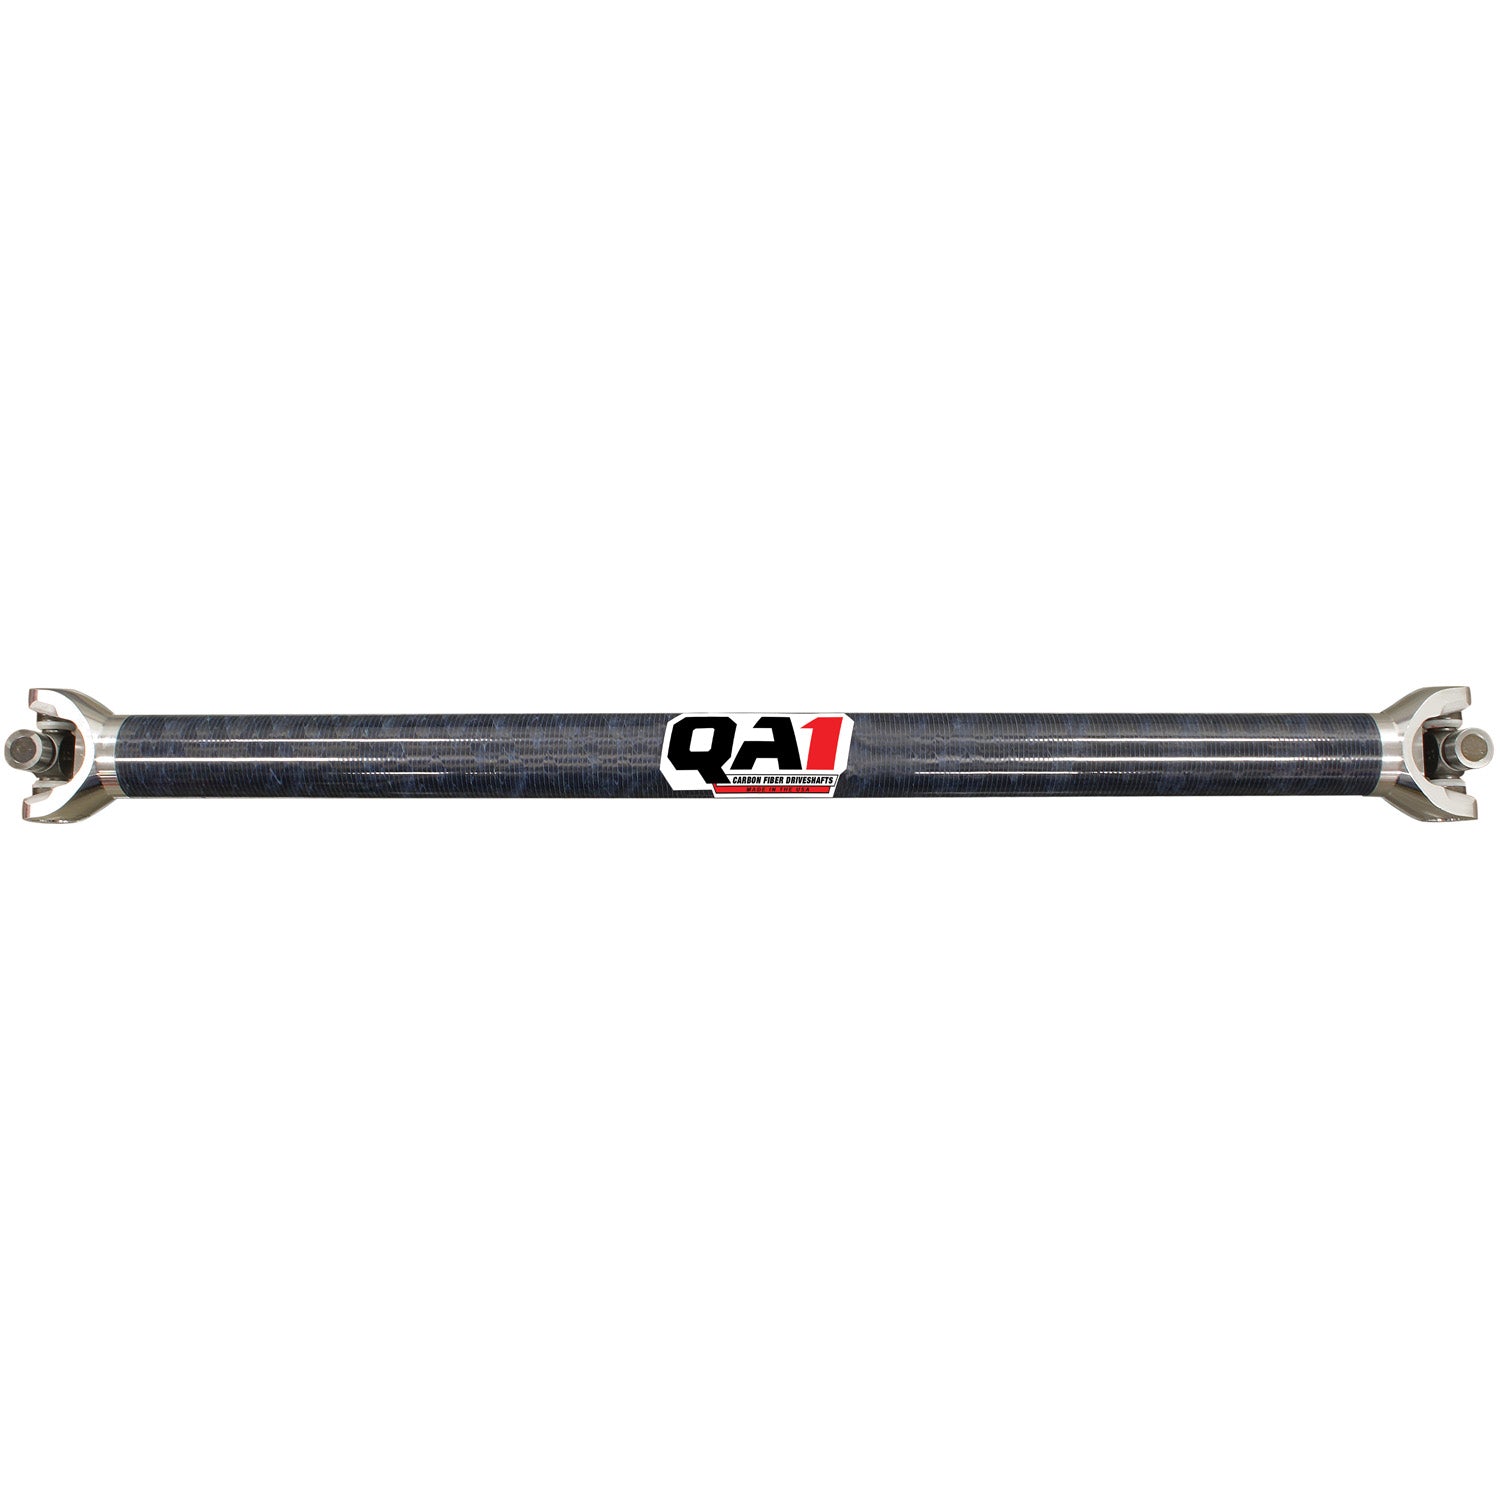 QA1 JJ-12212 Driveshaft, CF, CT-Dirt-Mod, 30.50 inch 2.3 inch, 1310 U-Joint, 1500Lb.